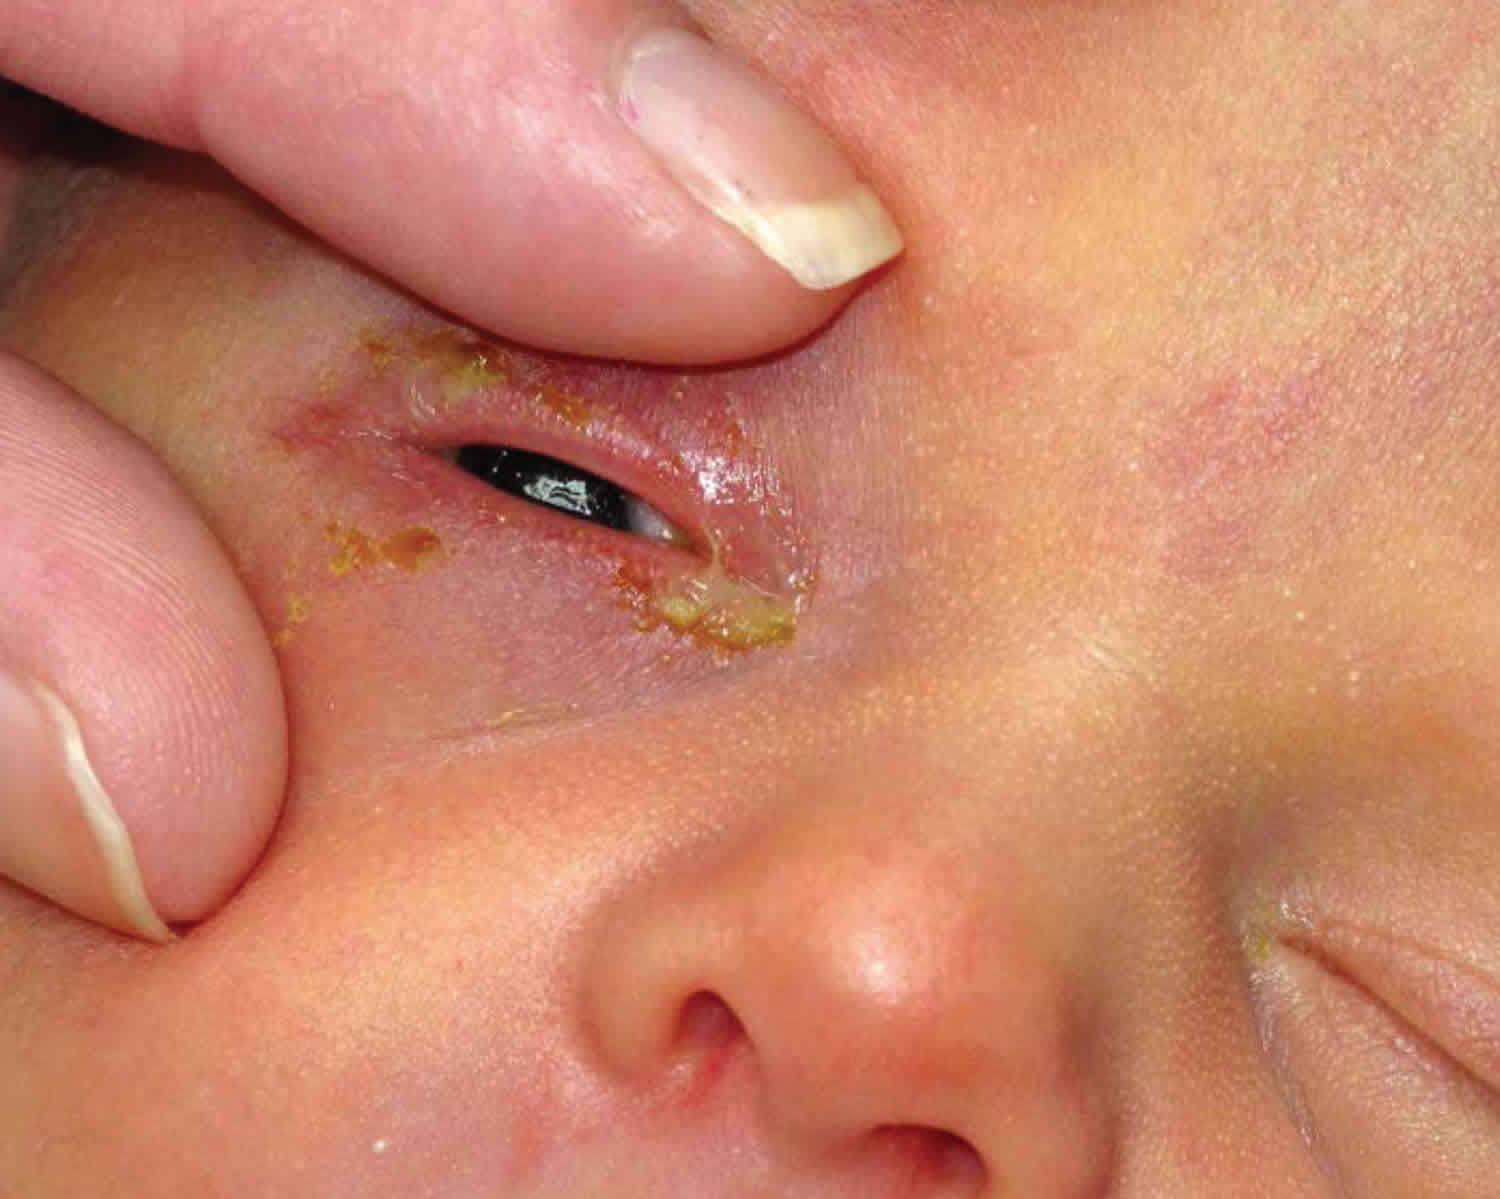 a baby's eye with Ophthalmia Neonatorum